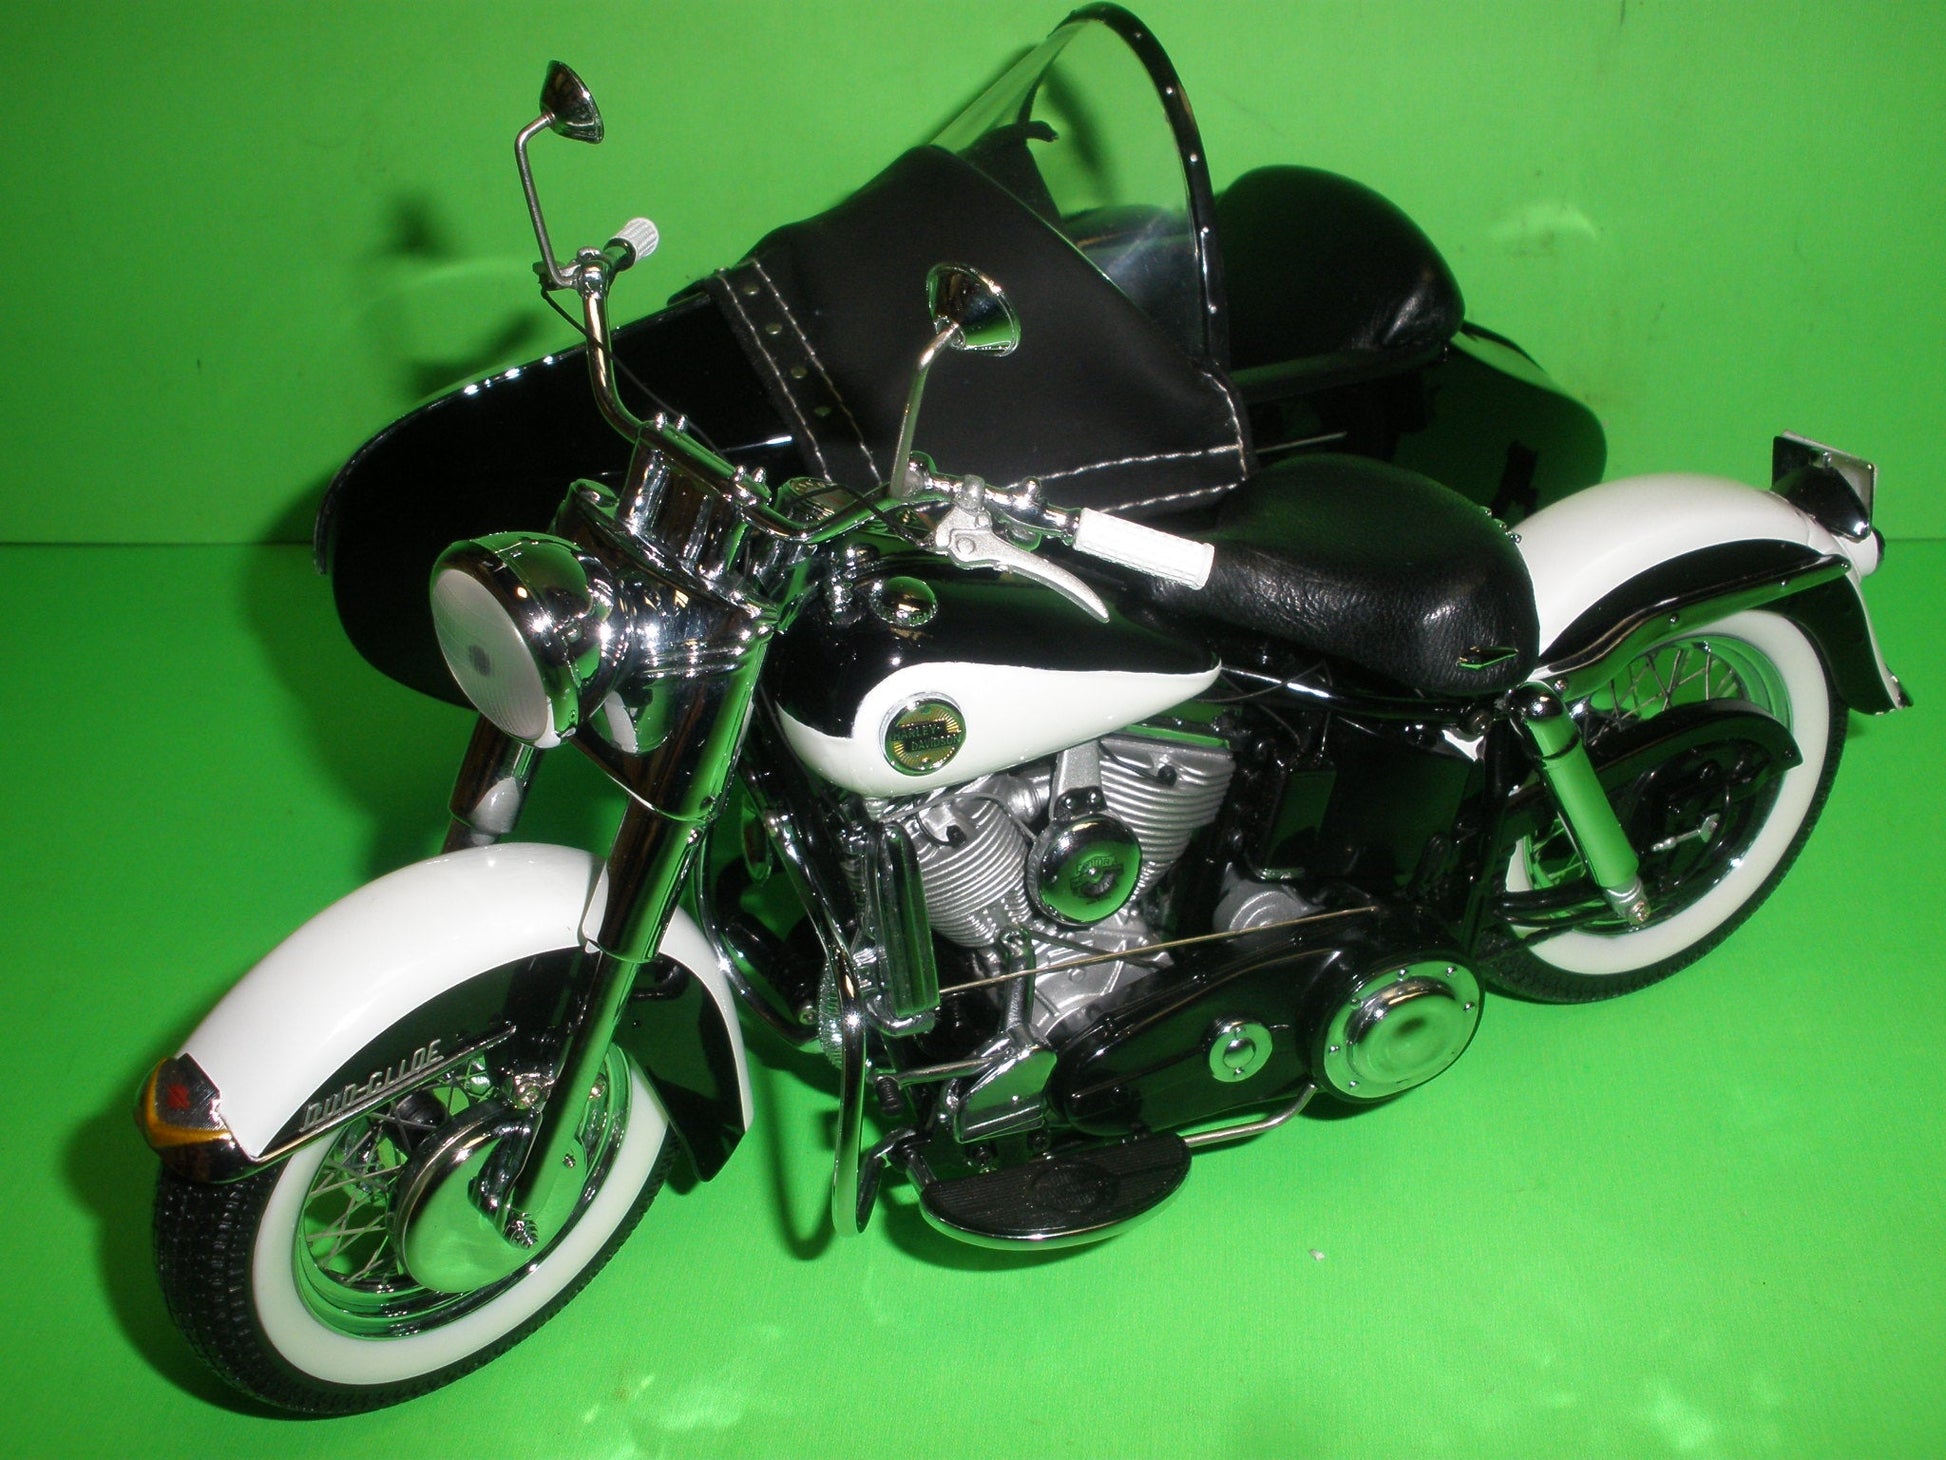 Harley Davidson 1958 Duo-Glide Motorcycle & Sidecar - B11YF02